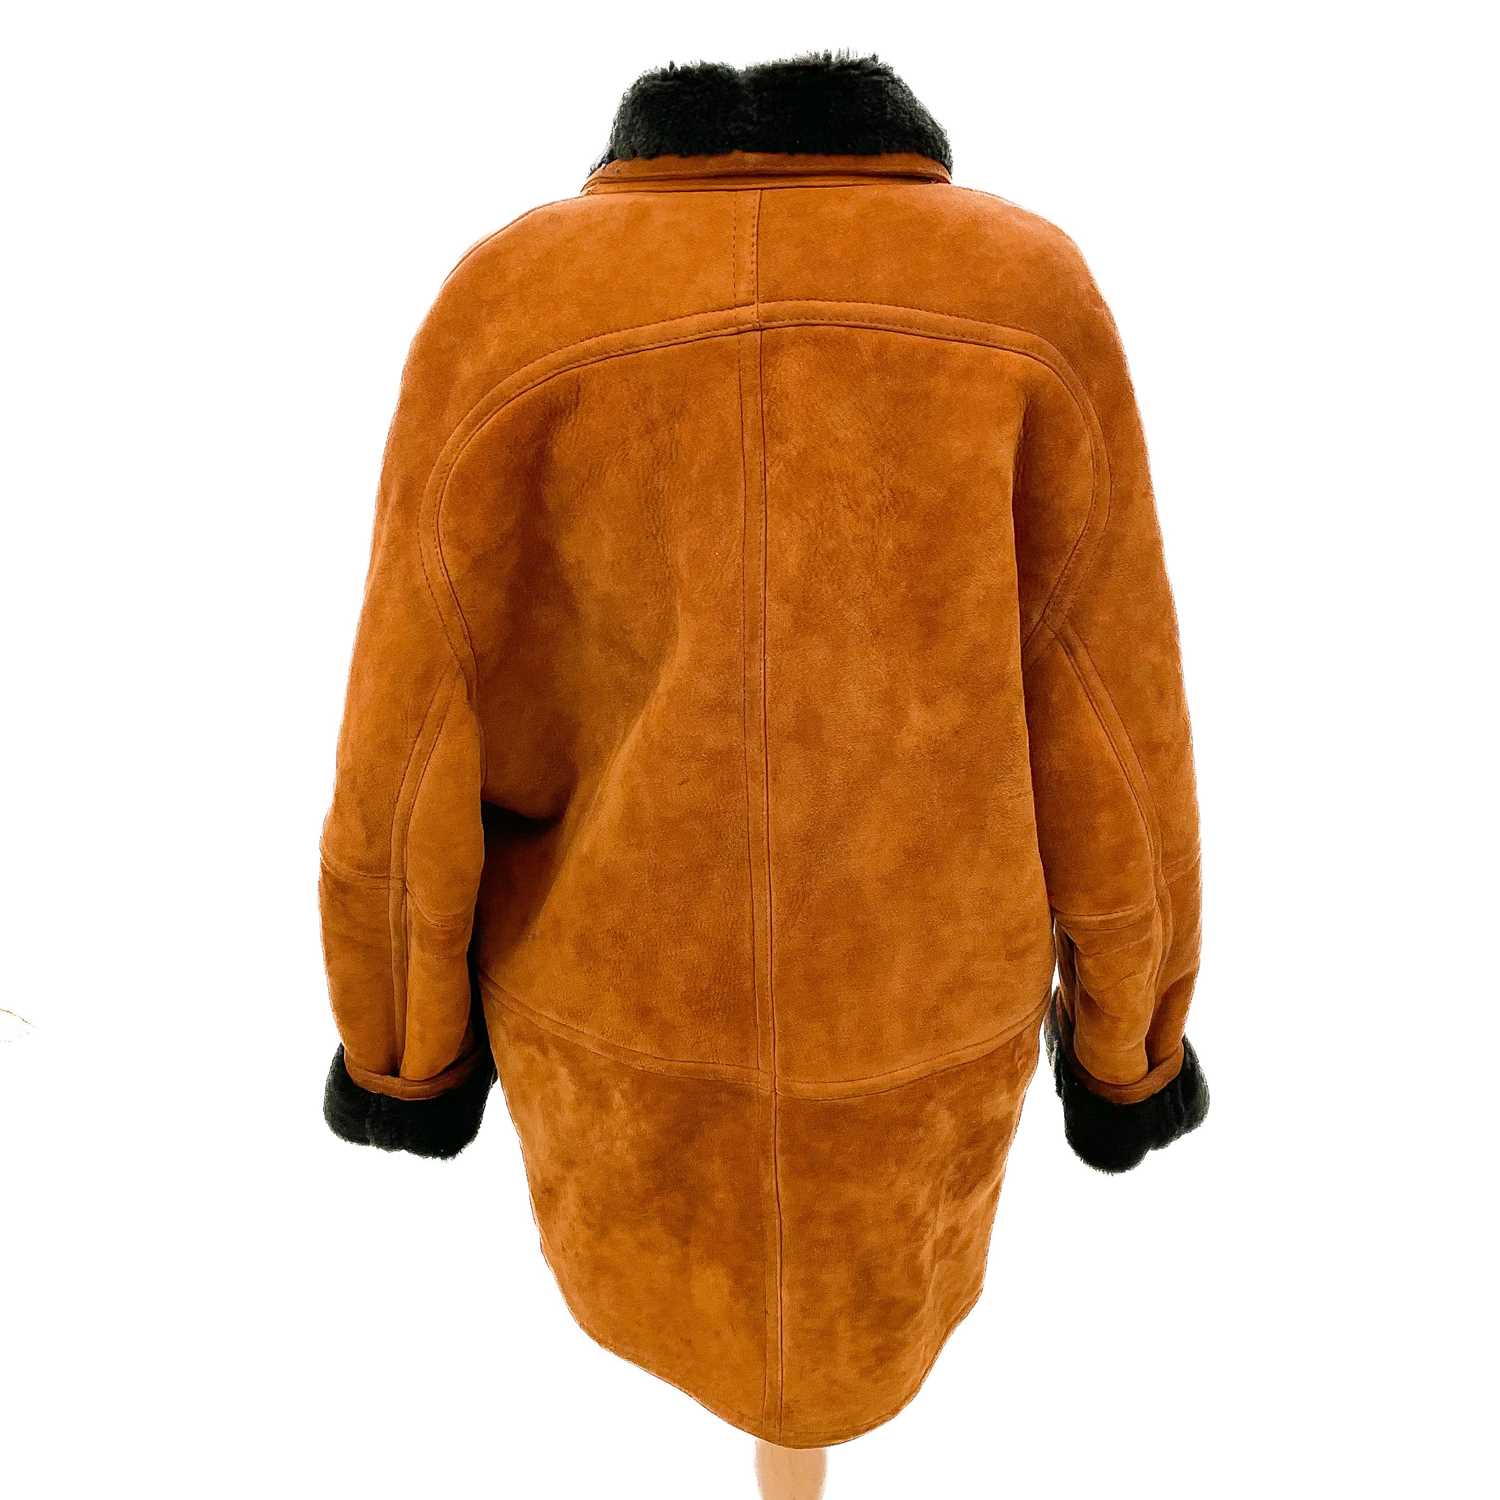 An Italian made sheepskin coat by Valozzer. - Image 2 of 4